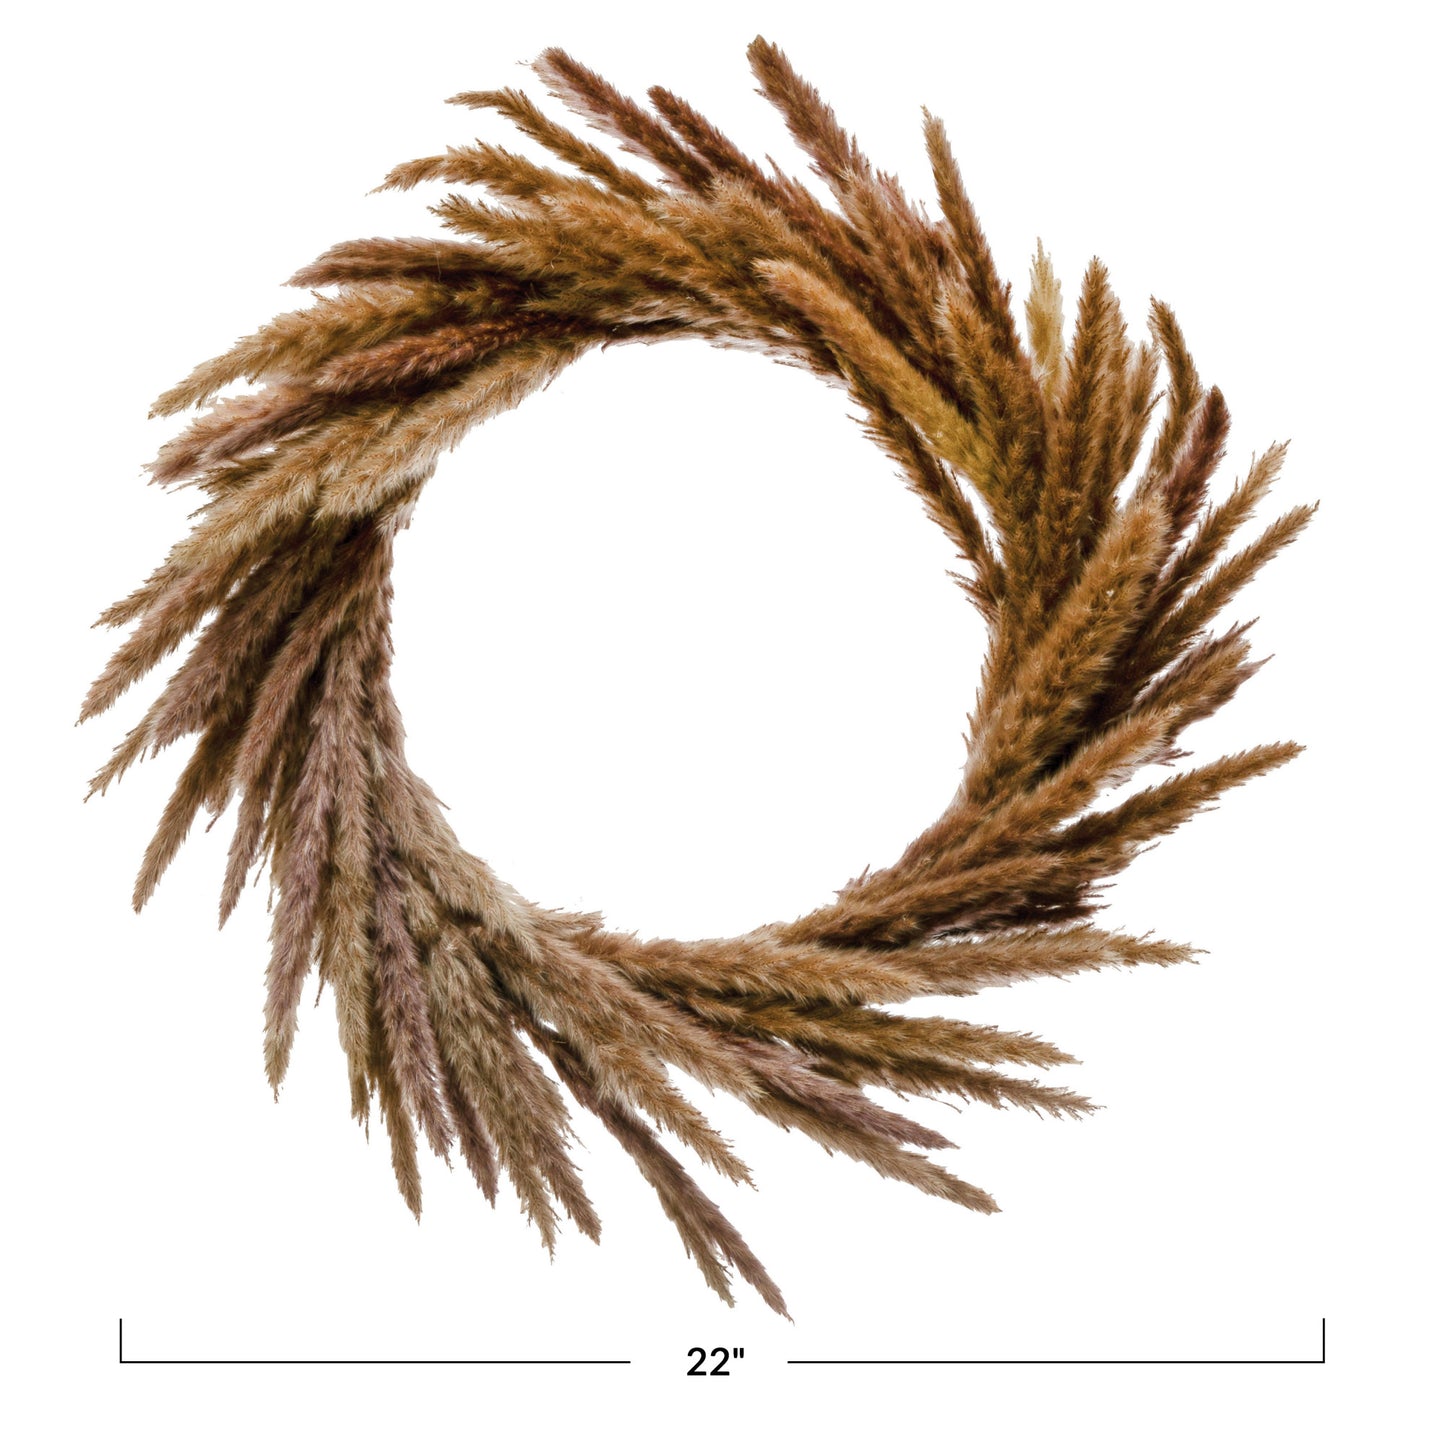 Reed Wreath